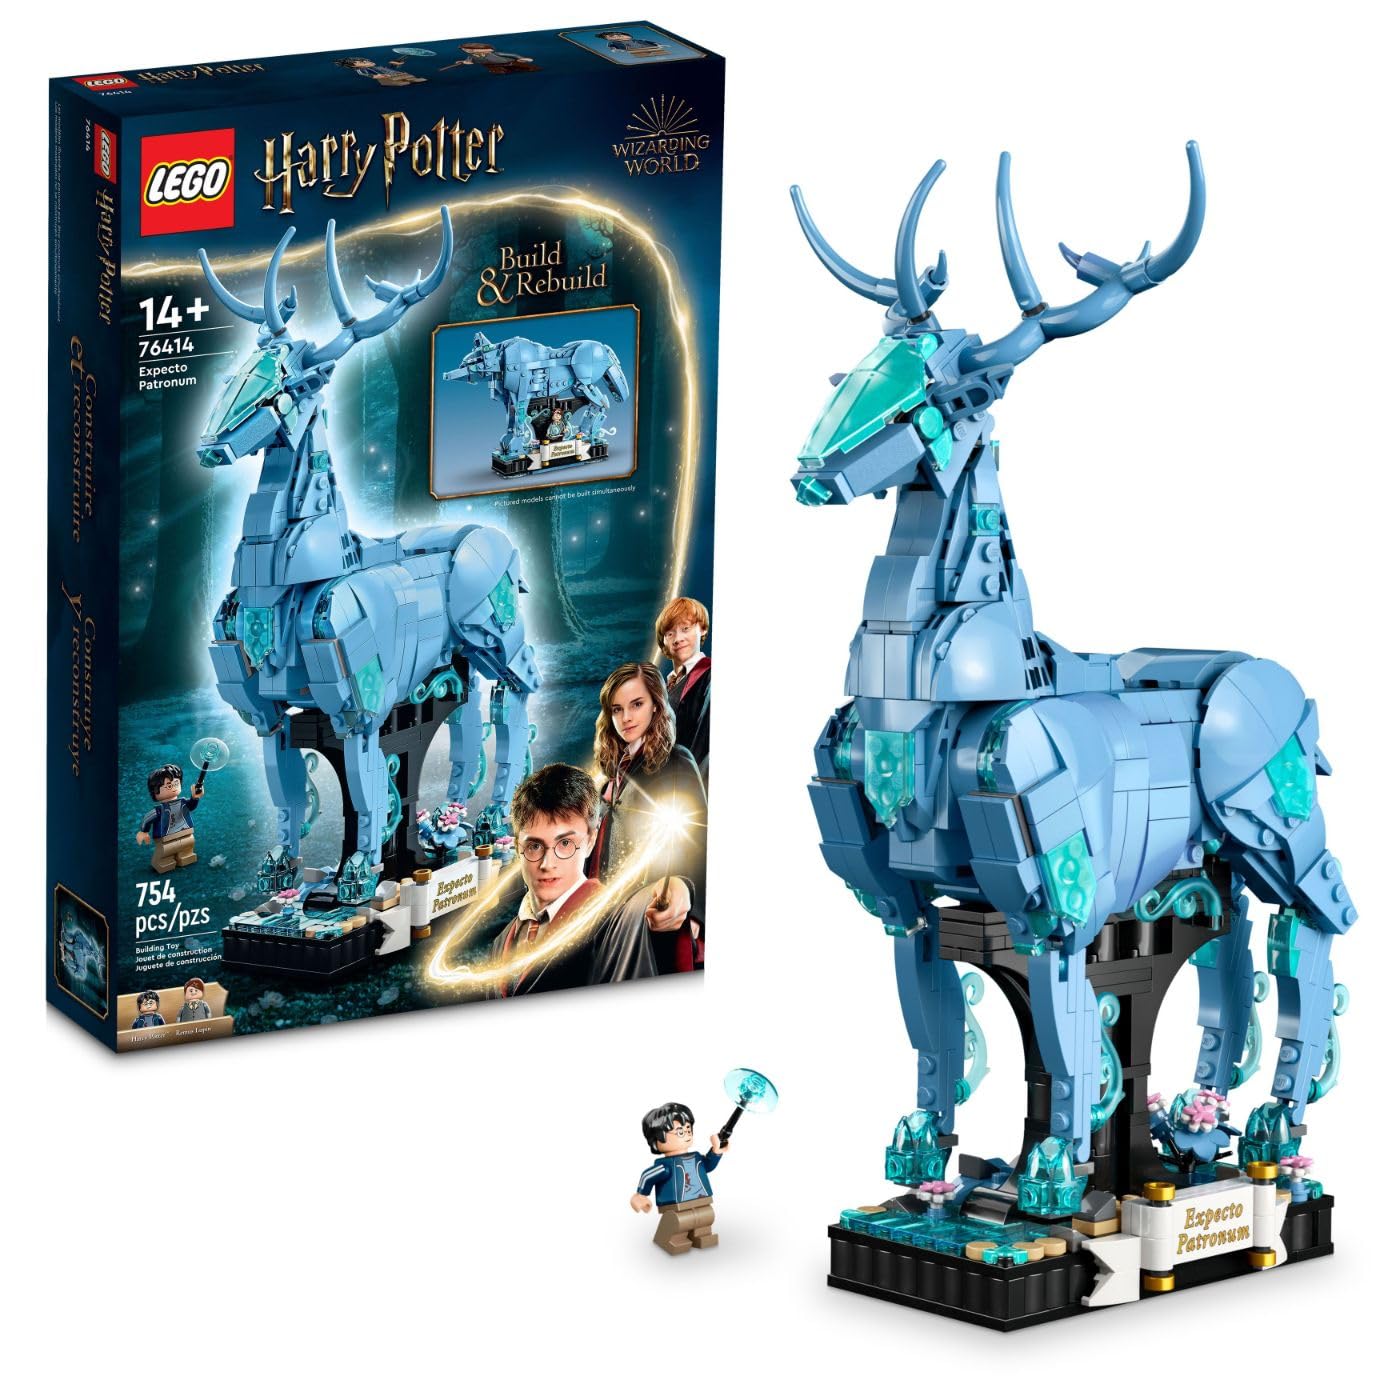 754-Piece LEGO Harry Potter Expecto Patronum Building Set $56 + Free Shipping